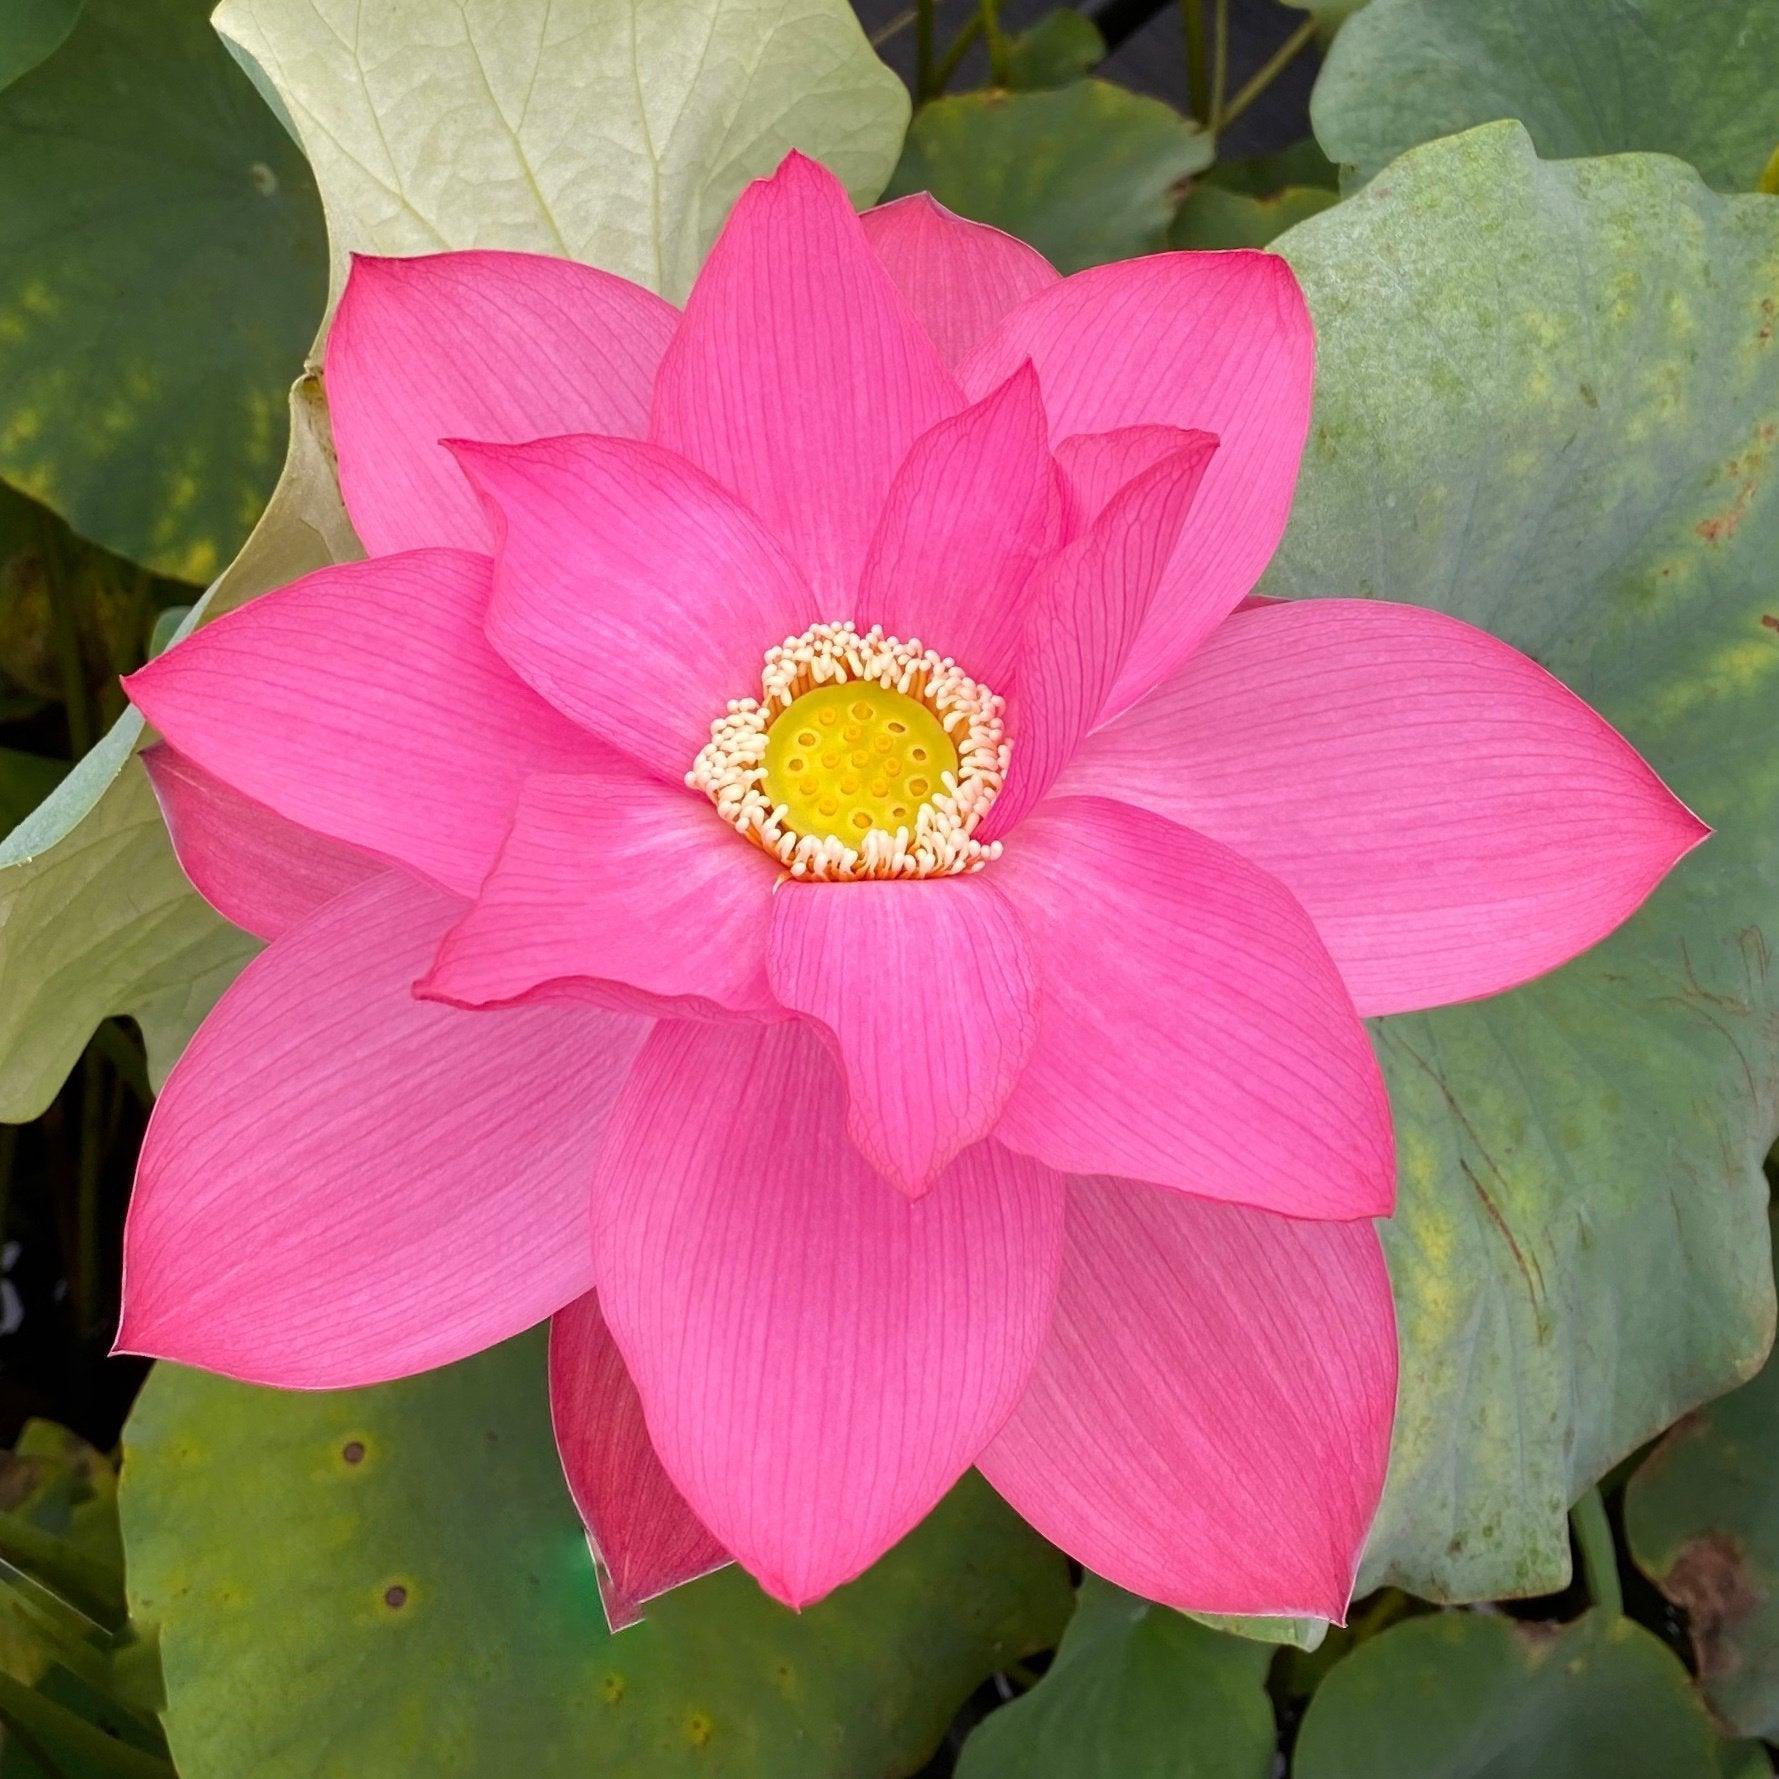 East Lake Pink Lotus (Bare Root) - Play It Koi